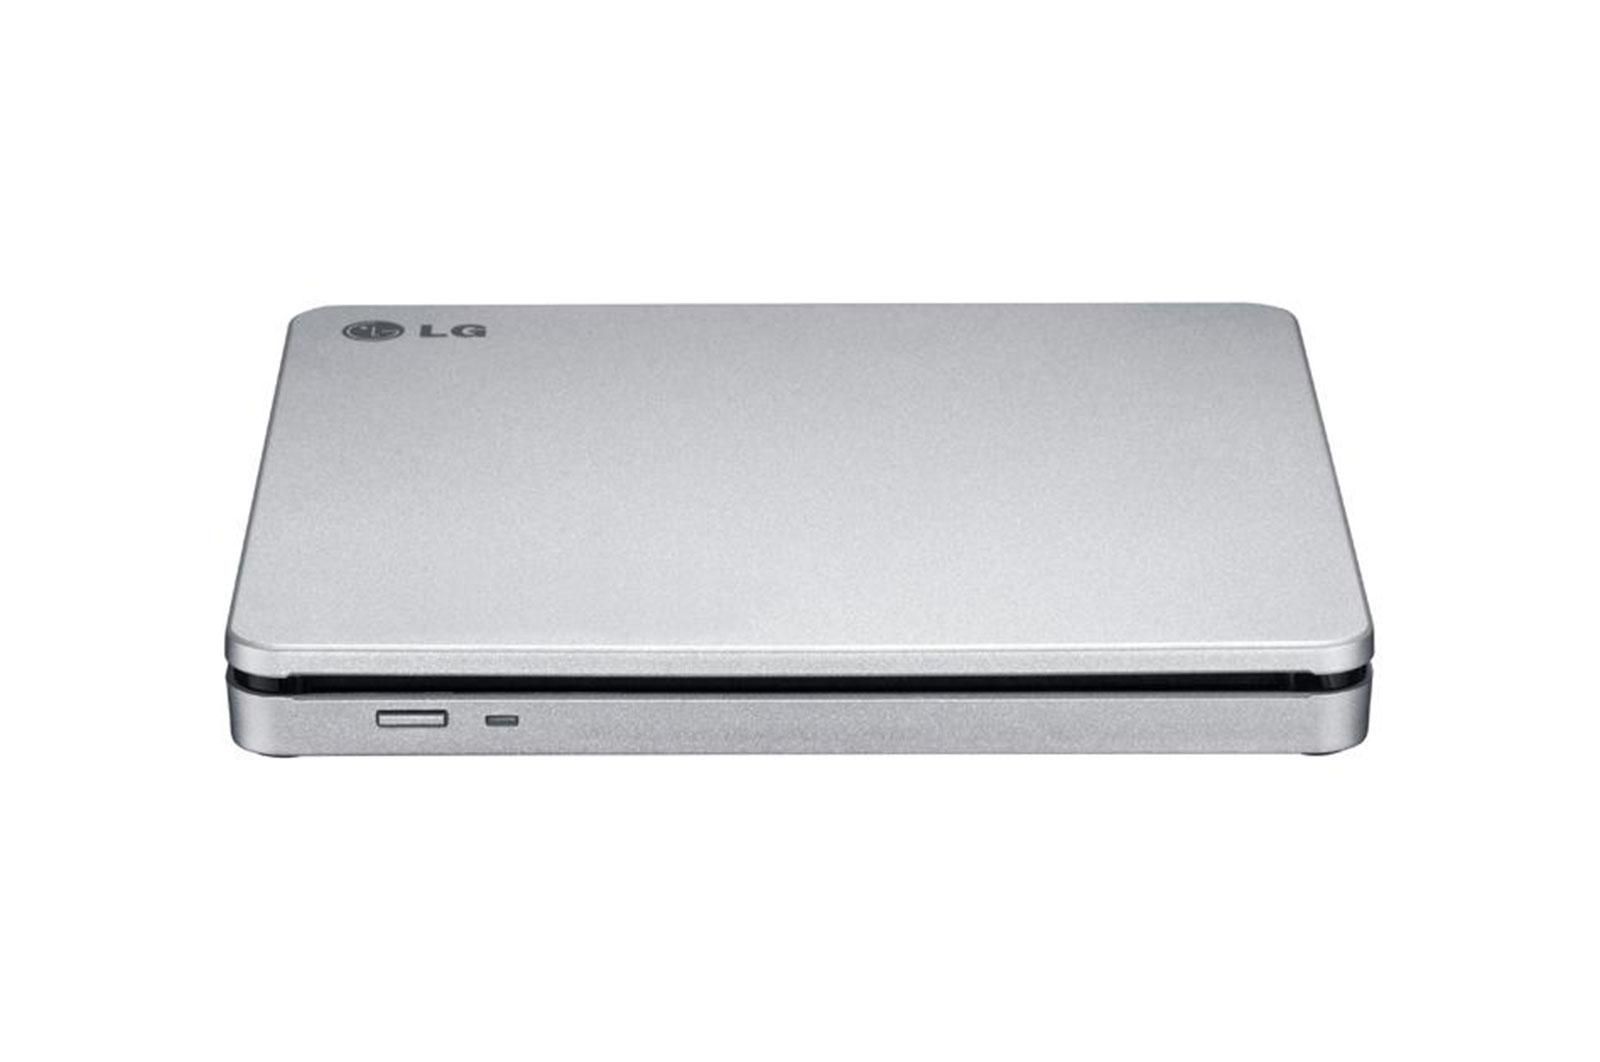 Ultra Slim Portable DVD-R Silver Hitachi-LG GP60NS6, GP60NS60 Series, DVD Write /Read Speed: 8x, CD Write/Read Speed: 24x, USB 2.0, Buffer 0.75MB, 144 mm x 137.5 mm x 14 mm._2